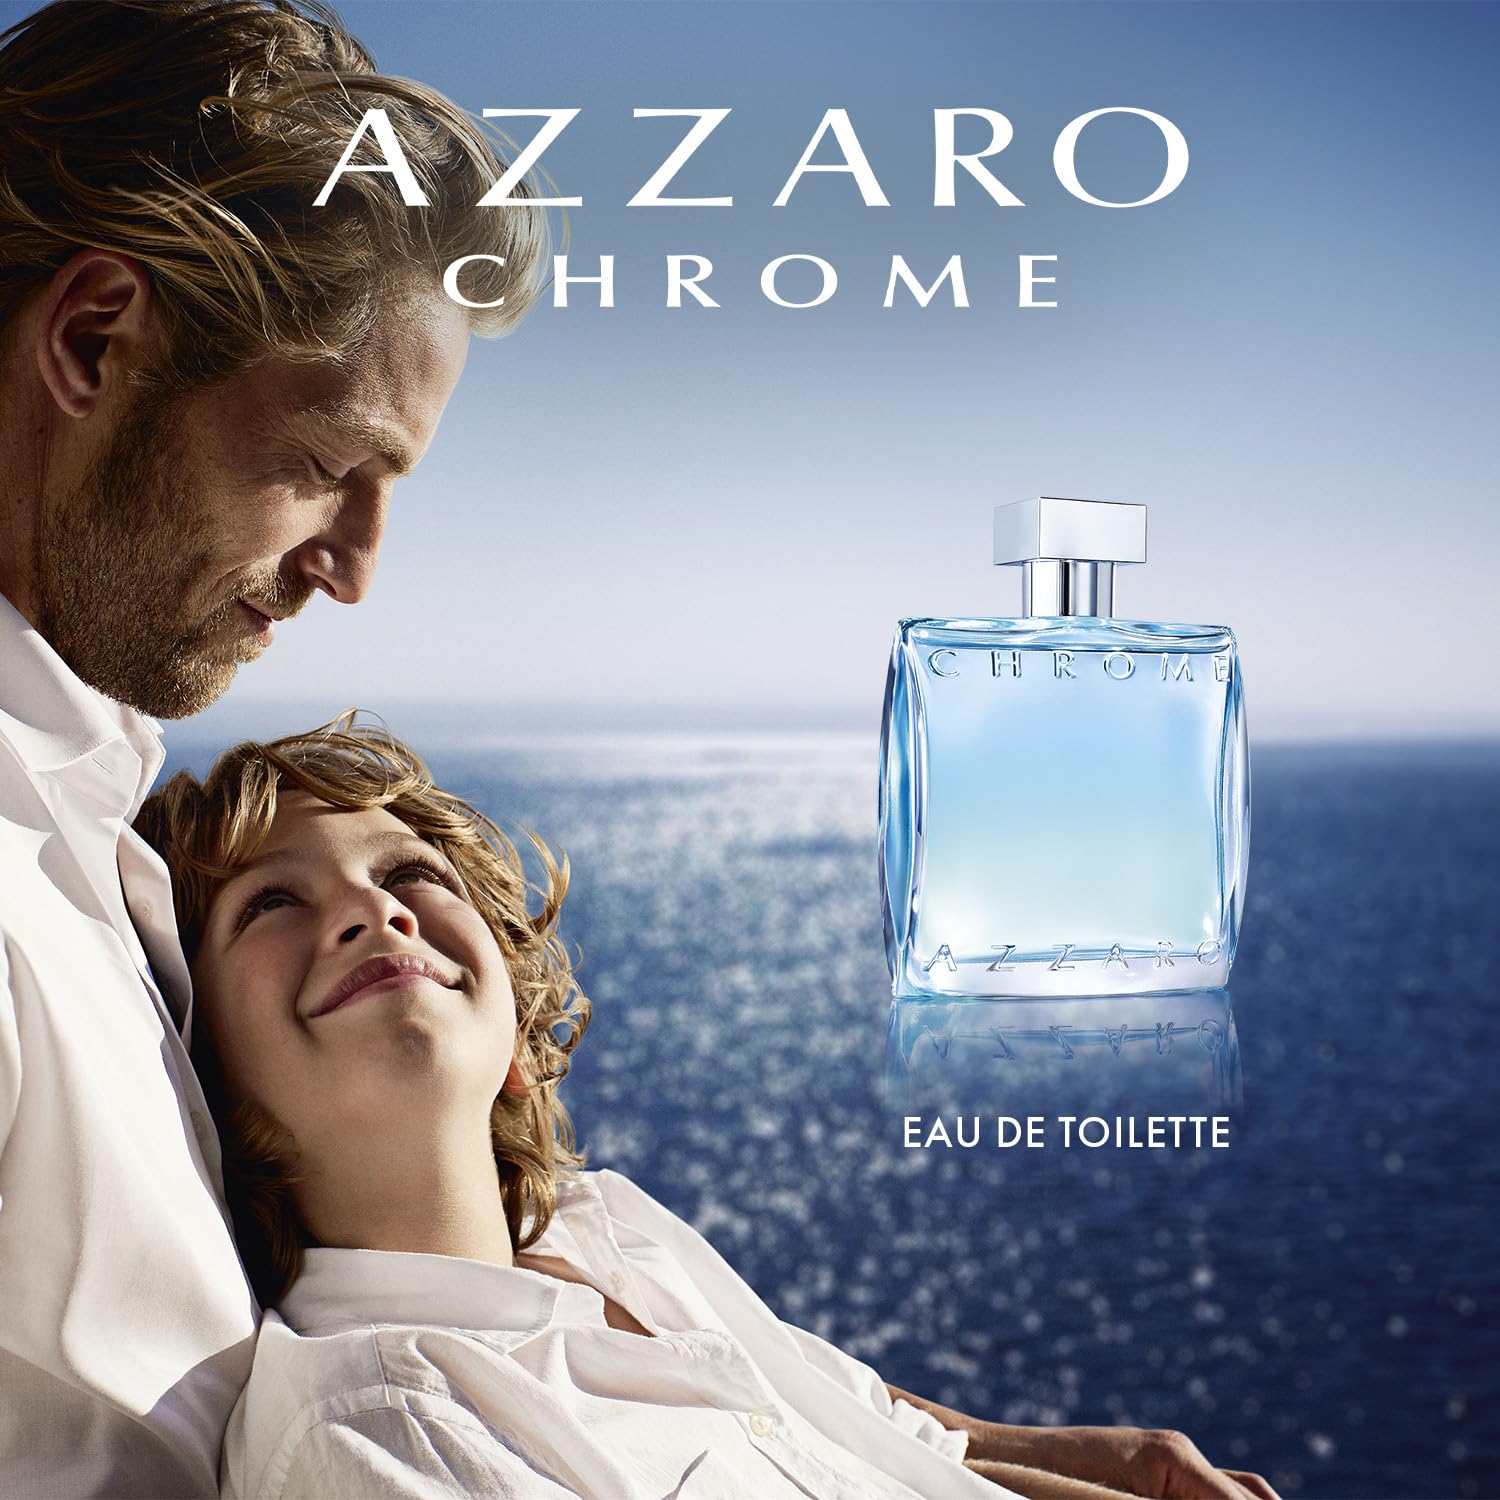 Azzaro Chrome Eau de Toilette - Fresh Aquatic Mens Cologne - Citrus, Woody, Musky Fragrance -Fresh Notes of Bergamot - Everyday Wear - Classic Summer Beach Scent - Luxury Perfumes for Men